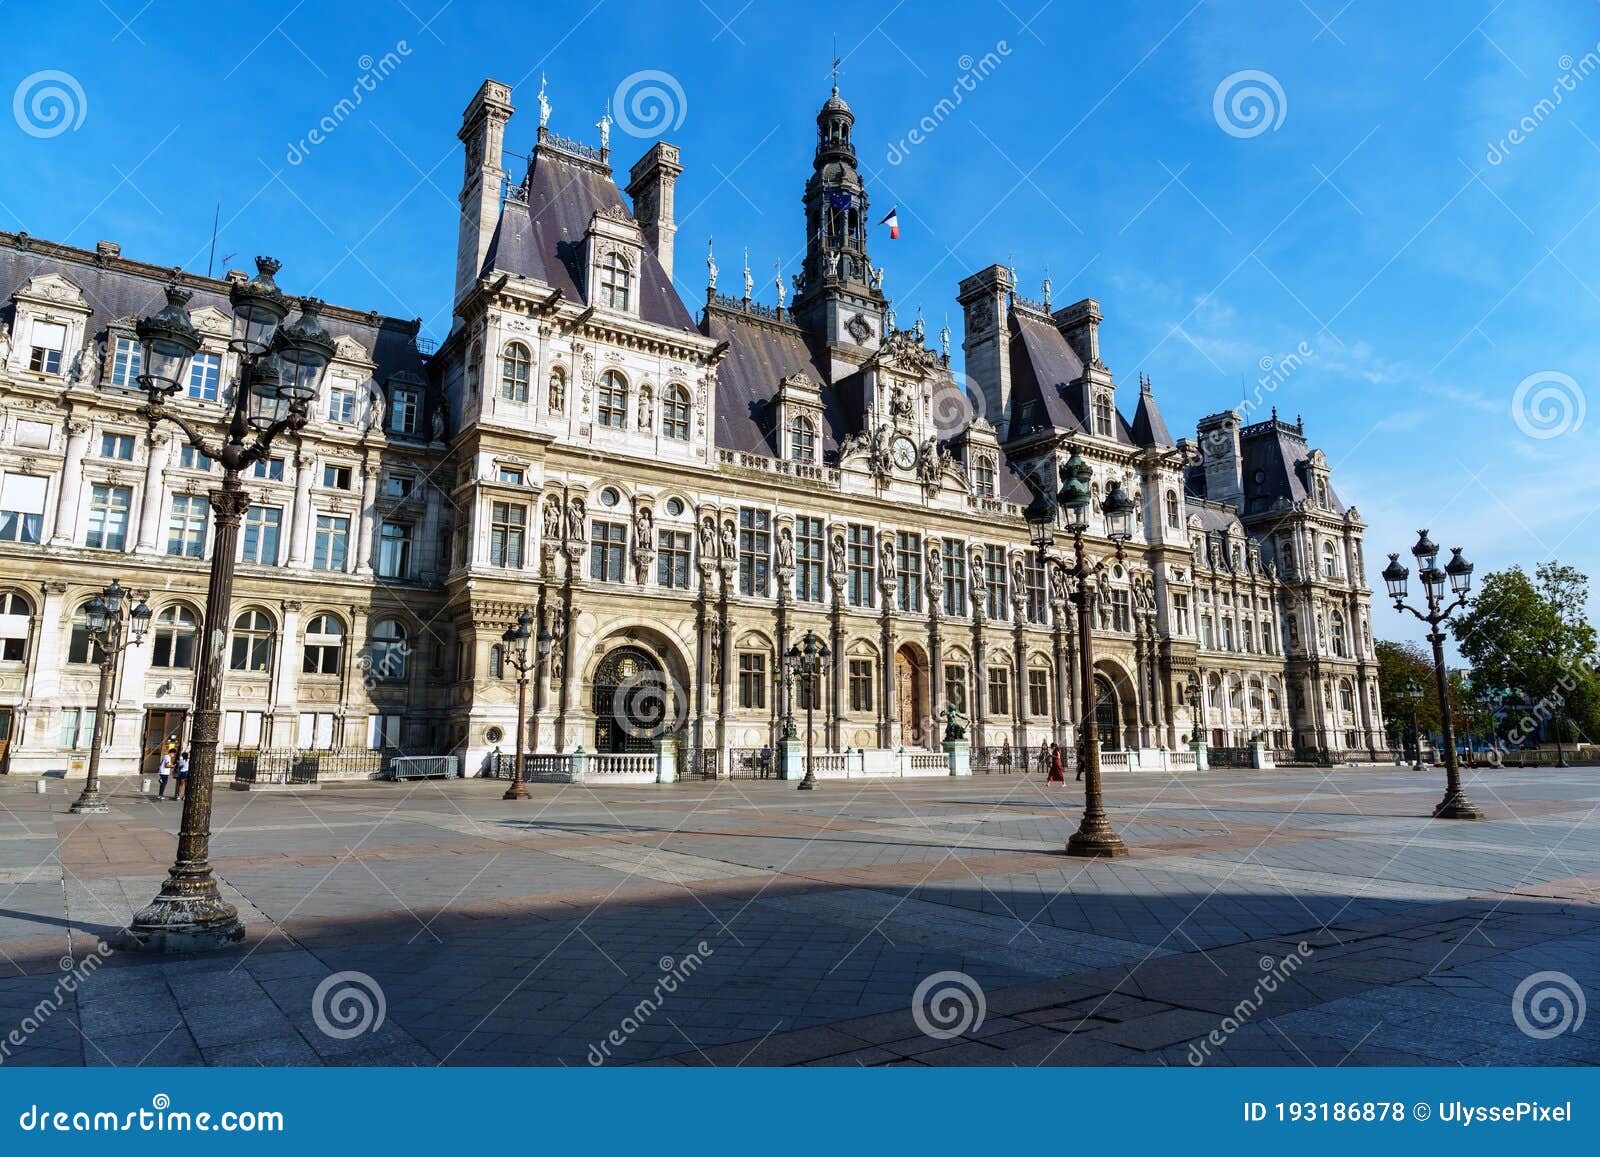 Hotel De Ville. City Hall of Paris Stock Photo - Image of hall, city ...